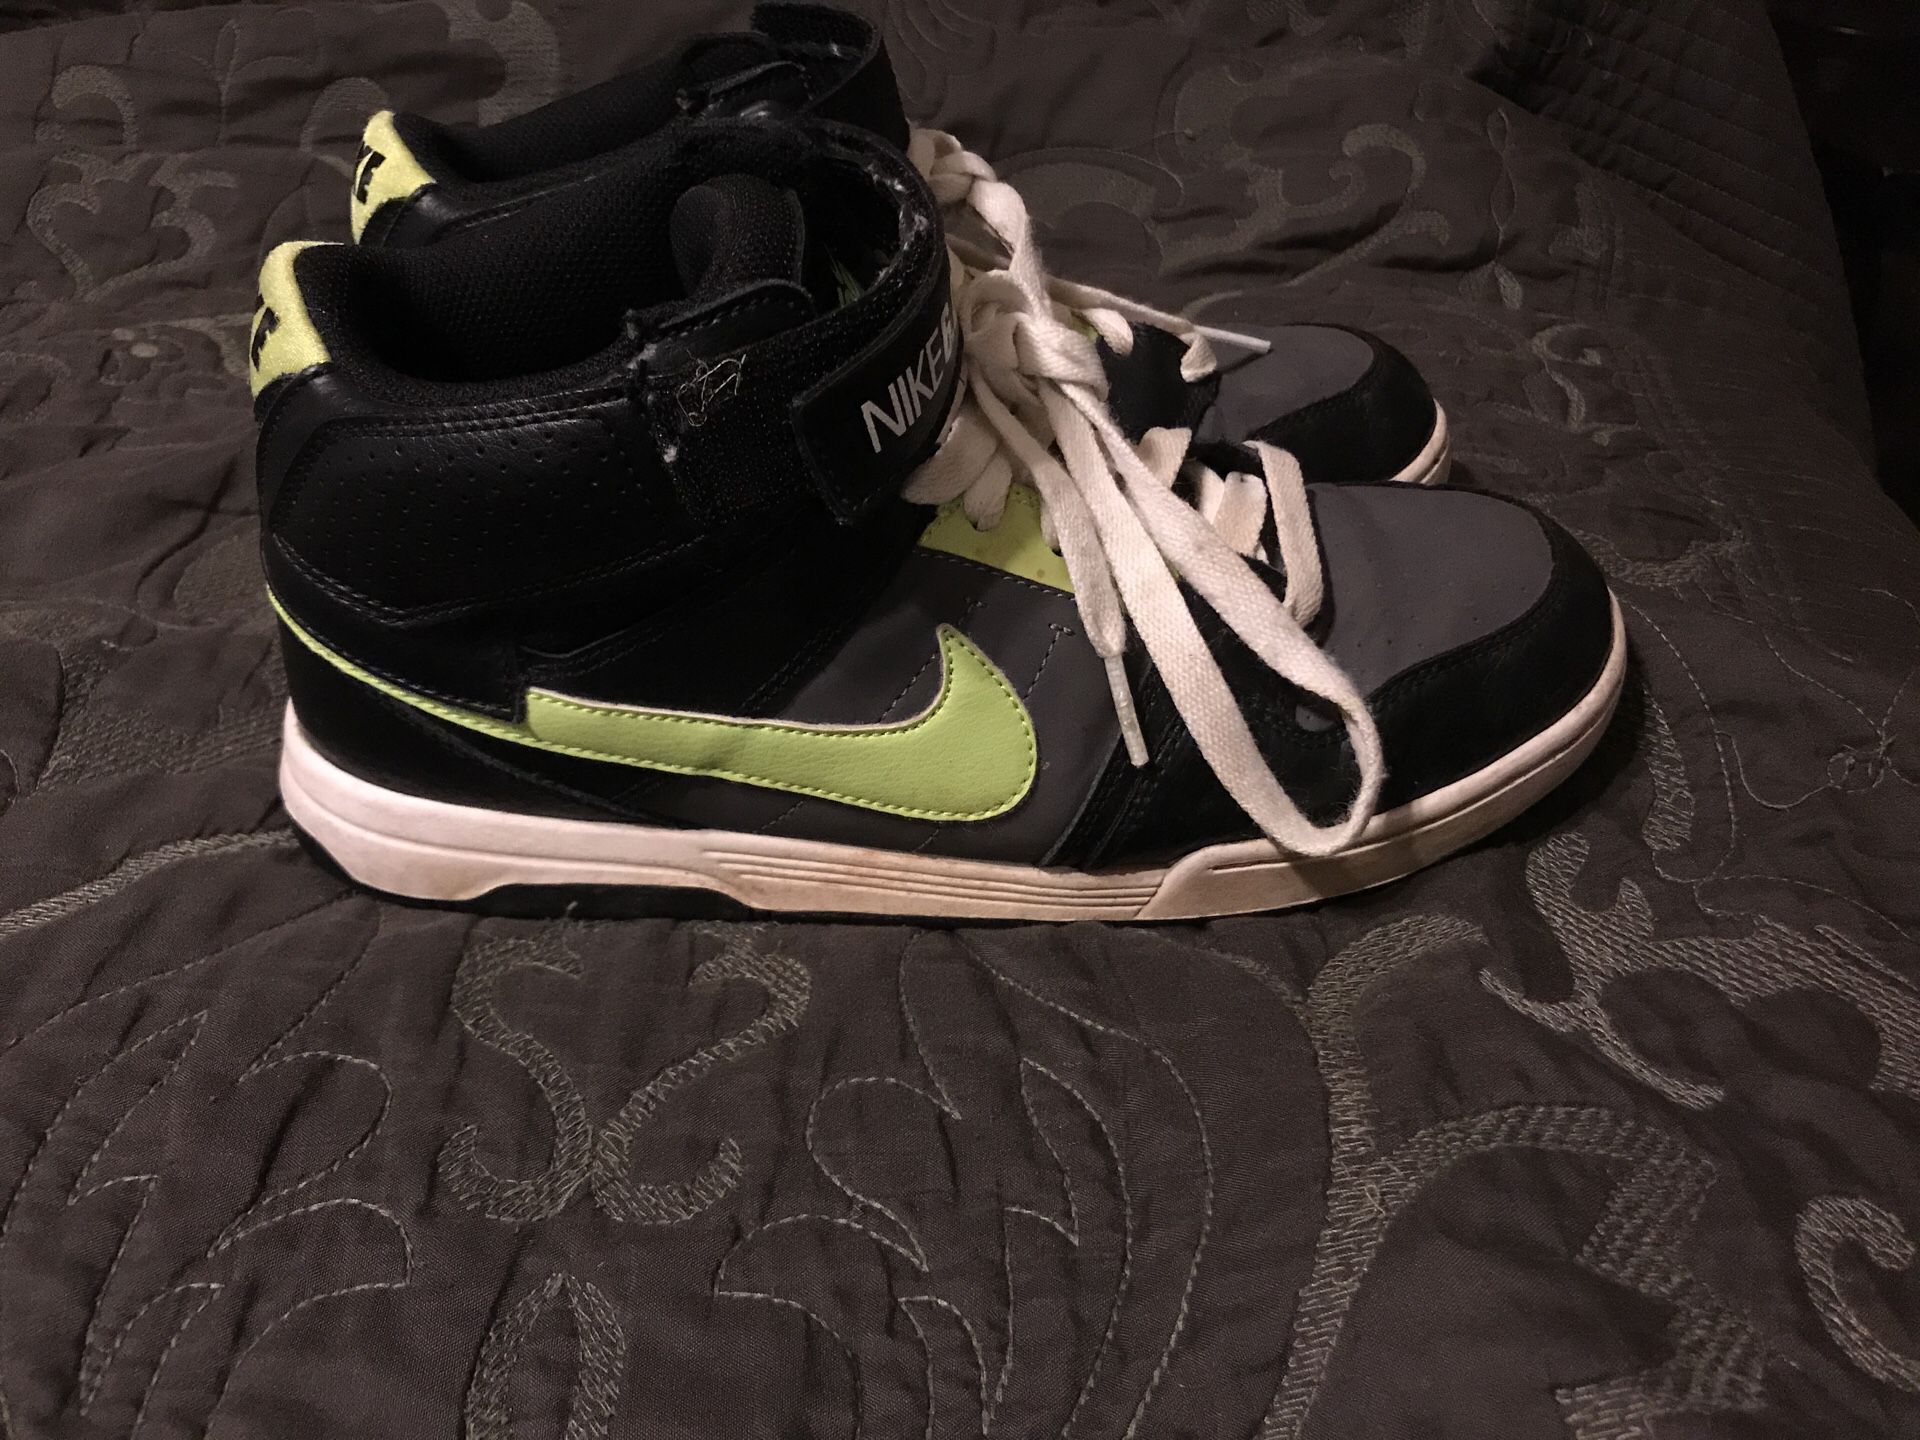 Men’s Nike shoes size 7